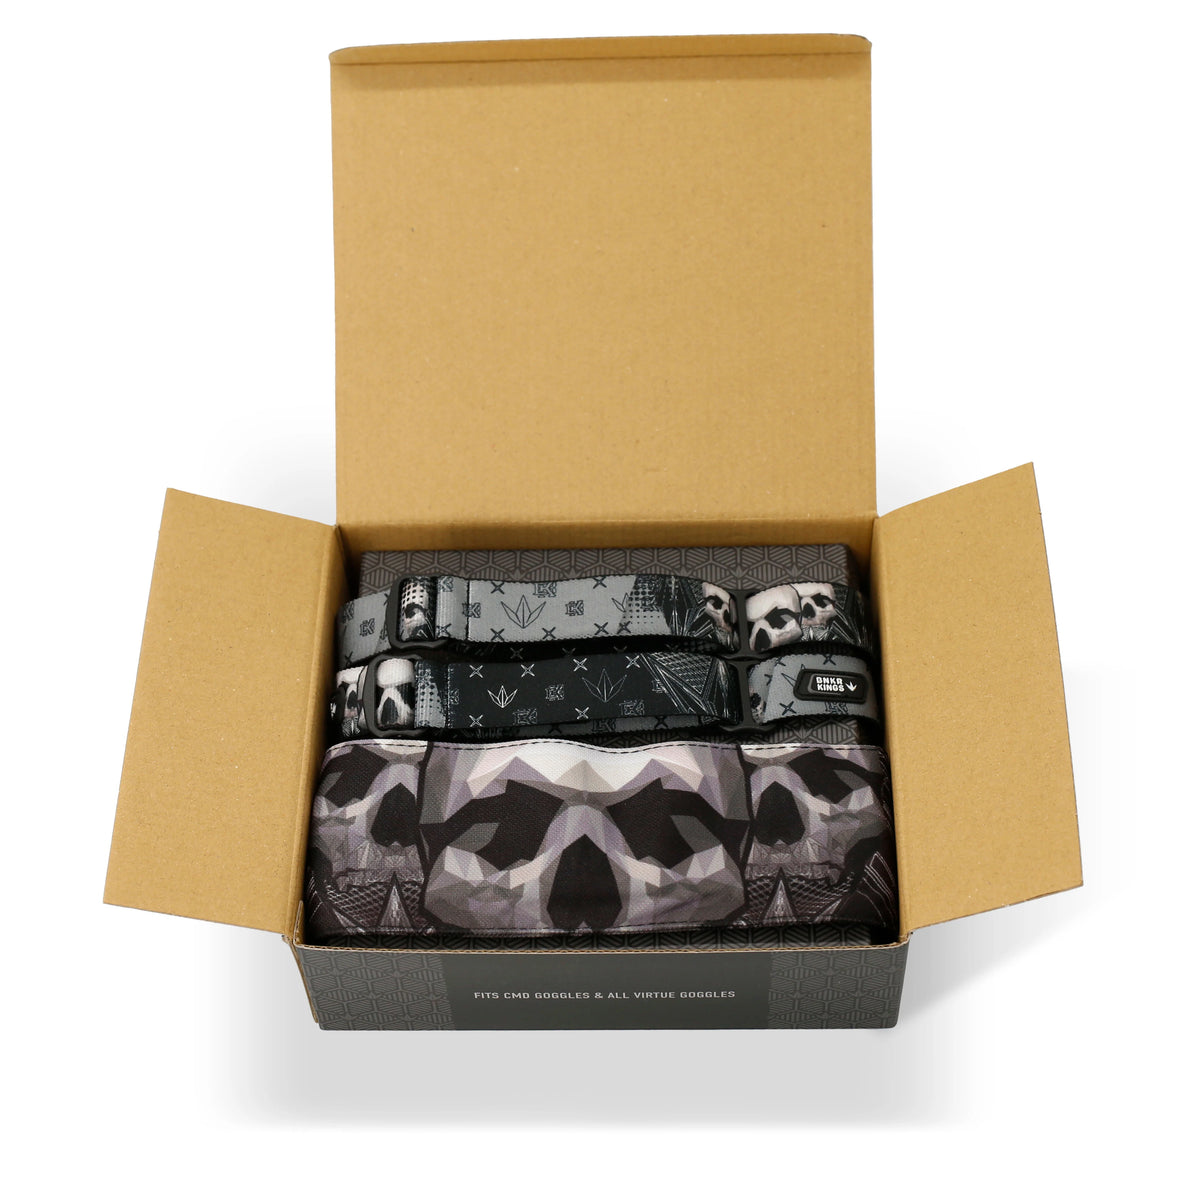 Black Skull 4-Point Goggle Strap & Headband Pack - Limited Edition